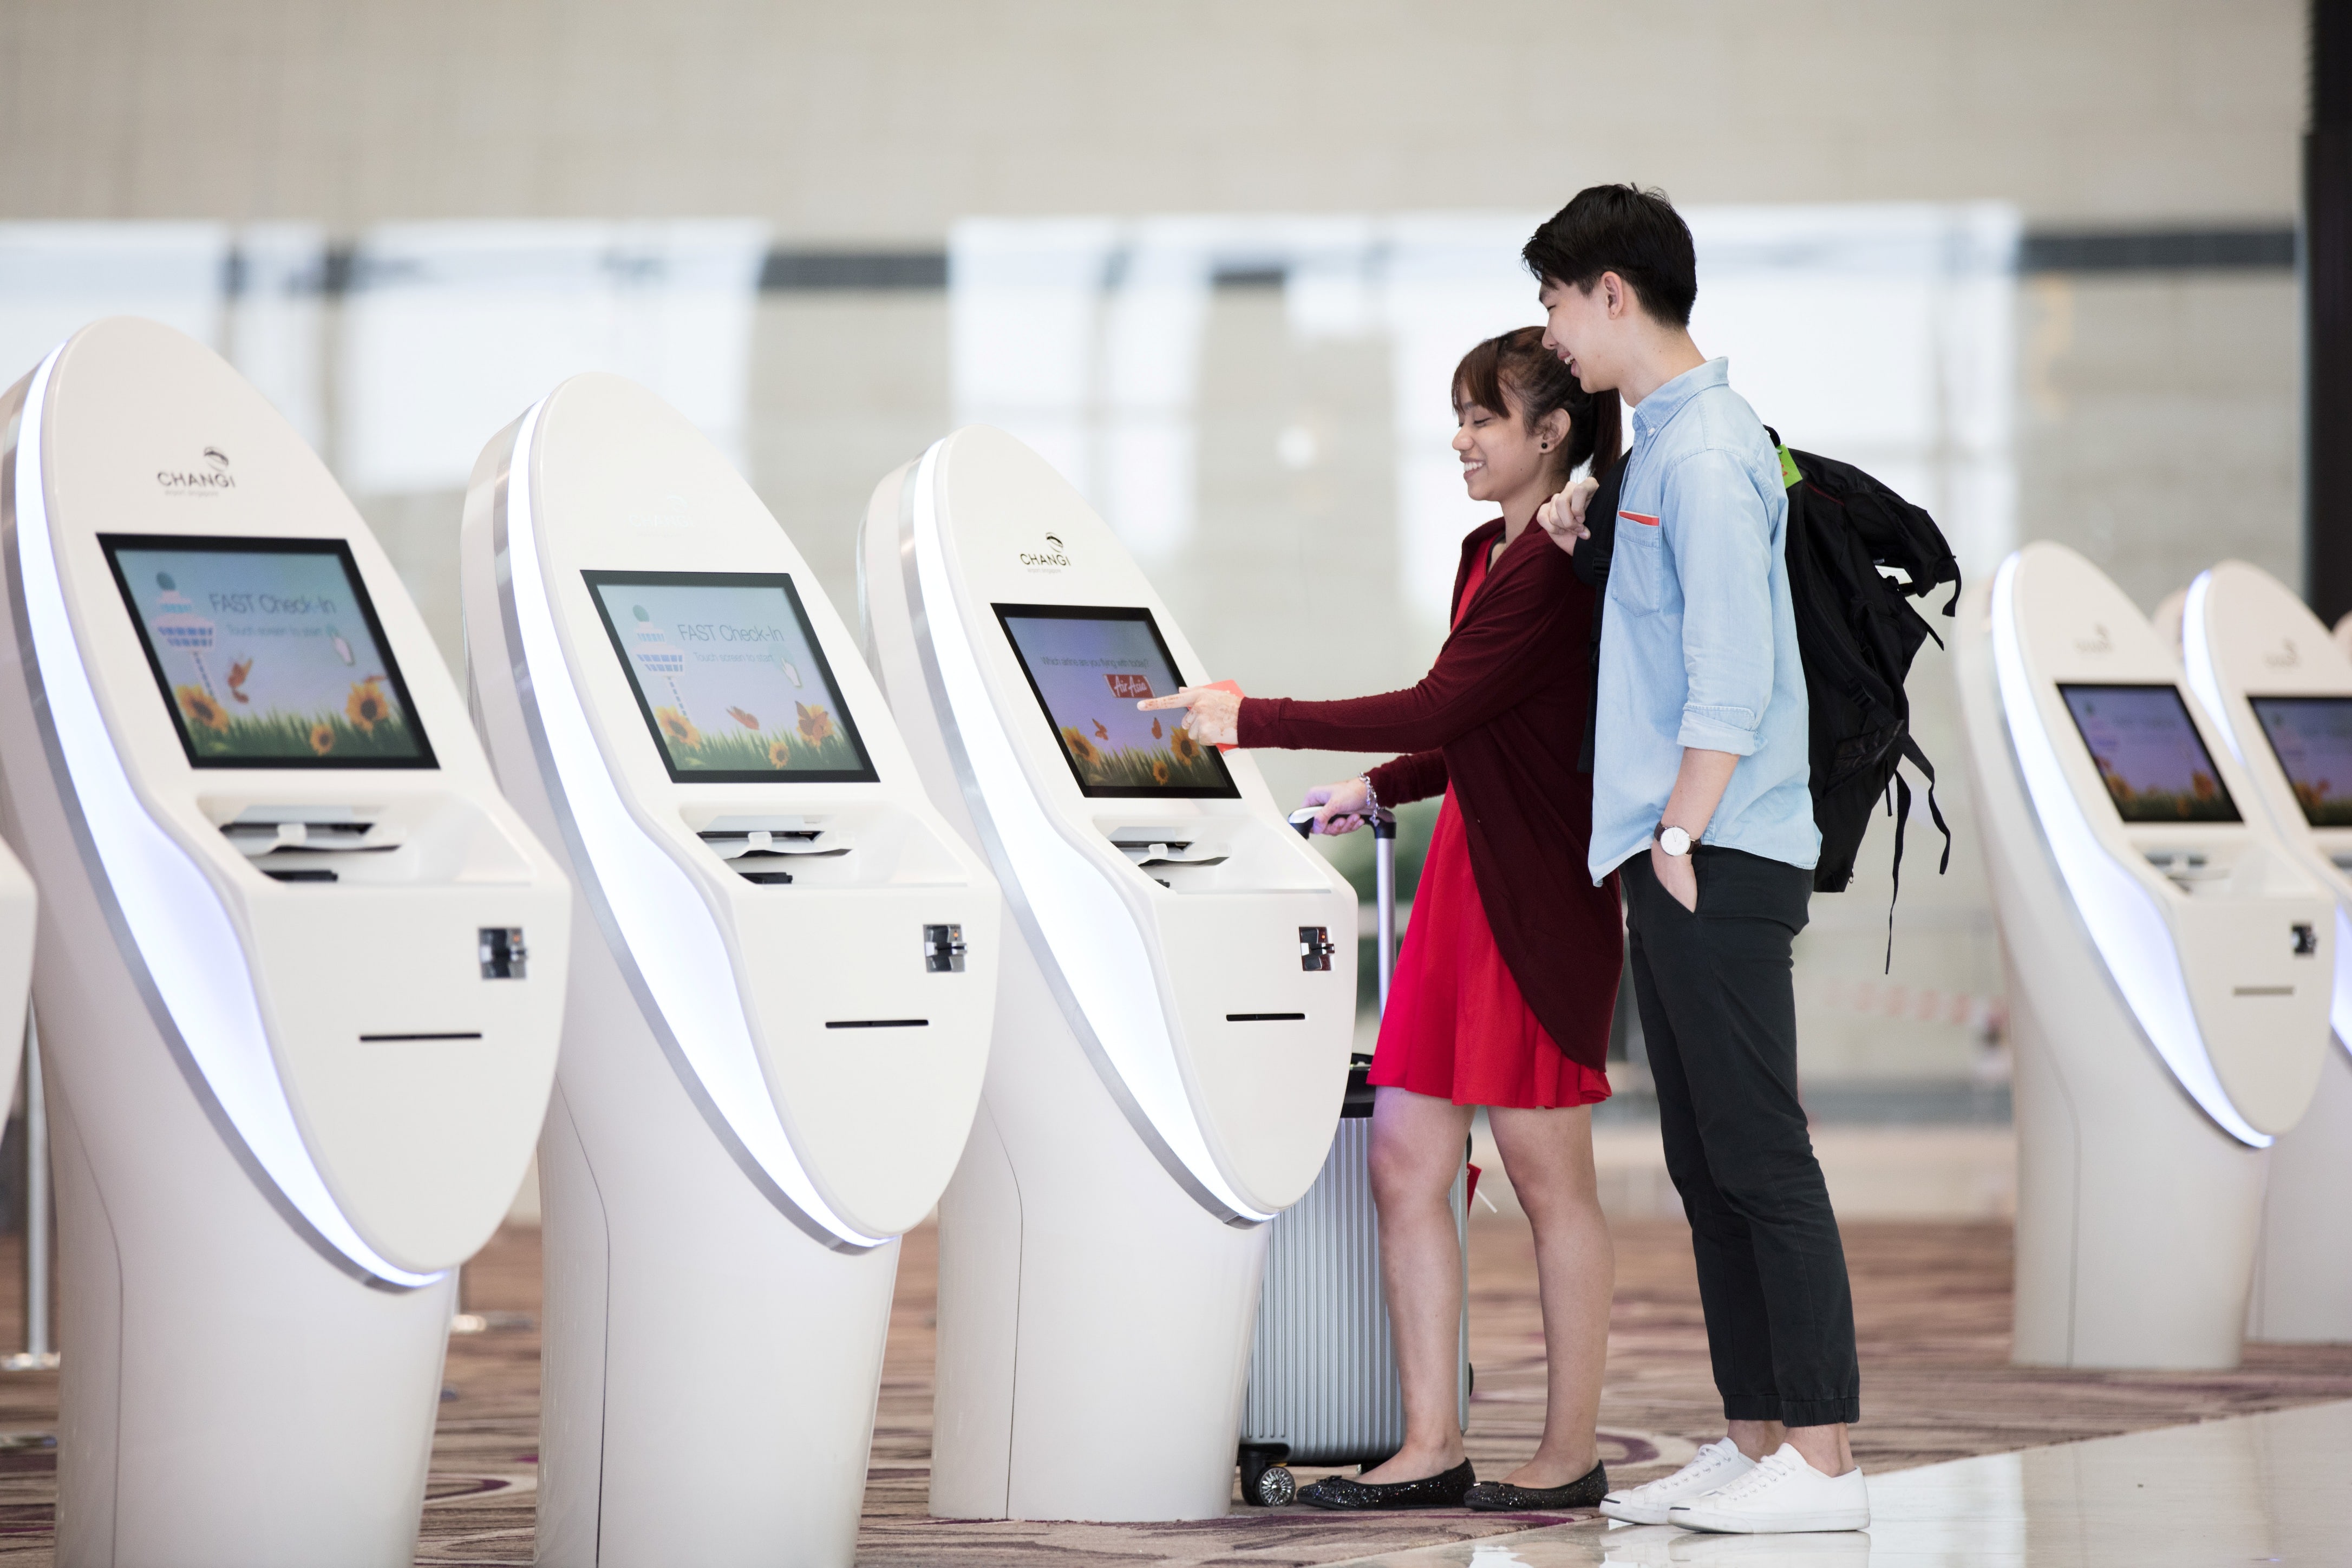 Terminal systems. Терминал. Технологии аэропорт. Singapore терминалы в аэропорту. Информационные технологии в аэропорту.